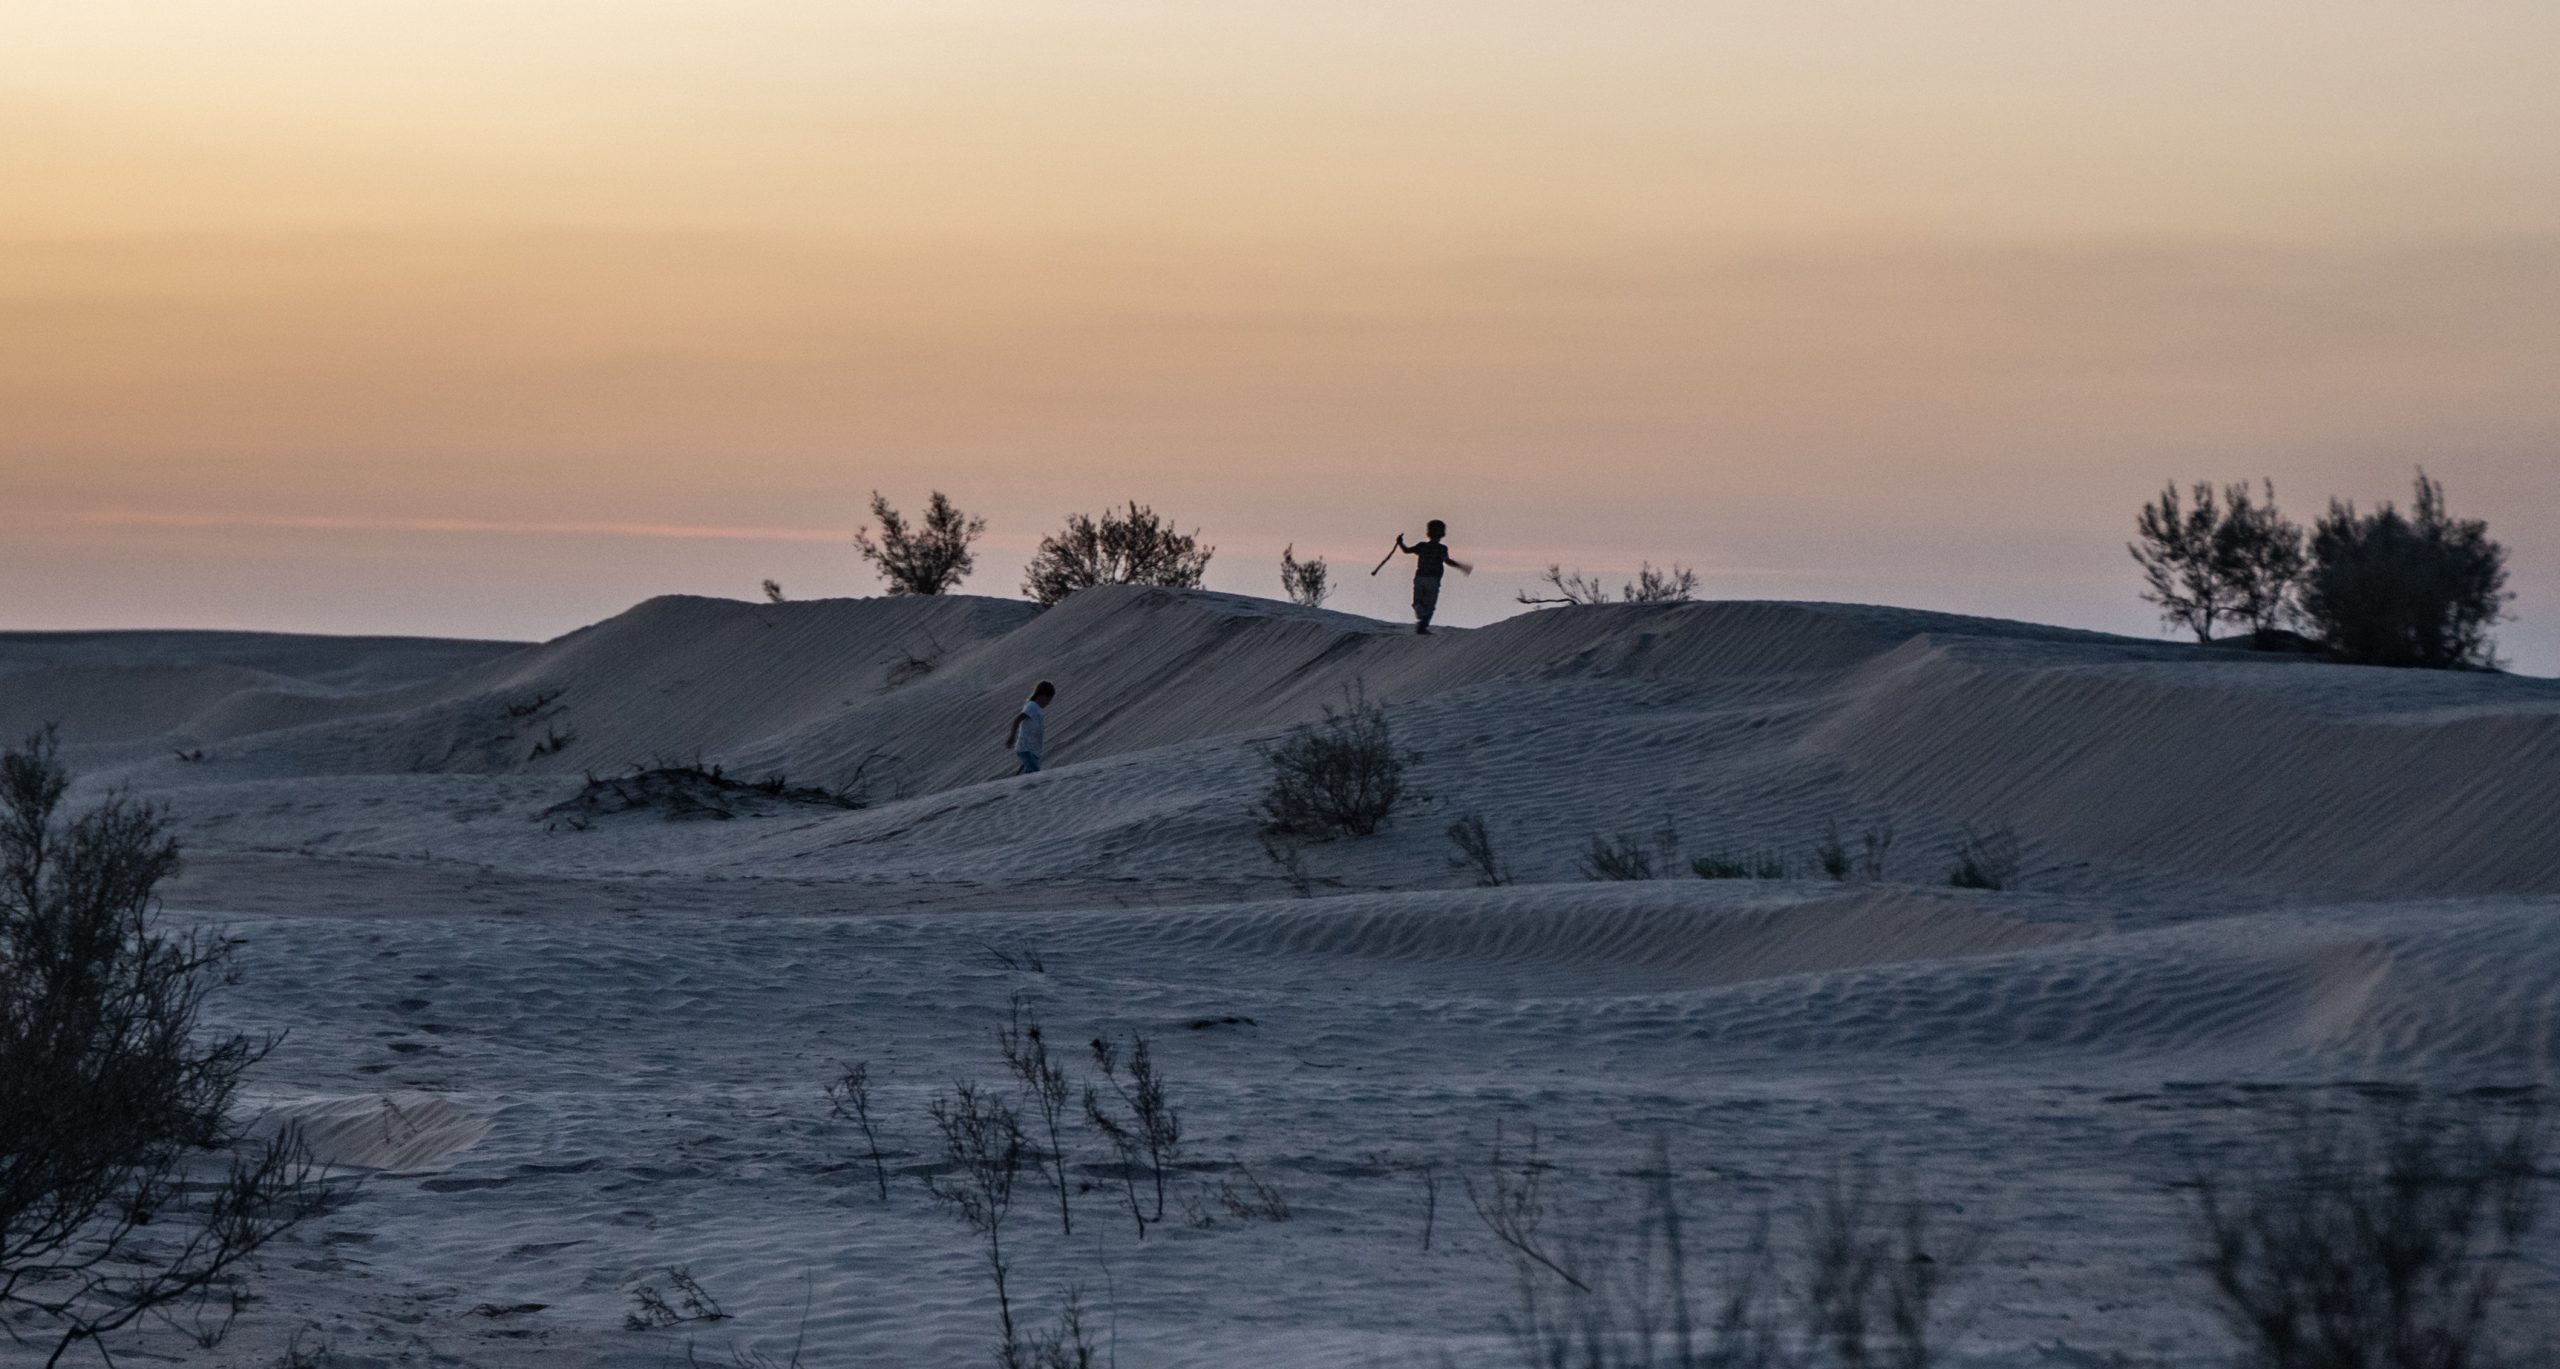 Children play in the dunes of the Tunisian Sahara Desert